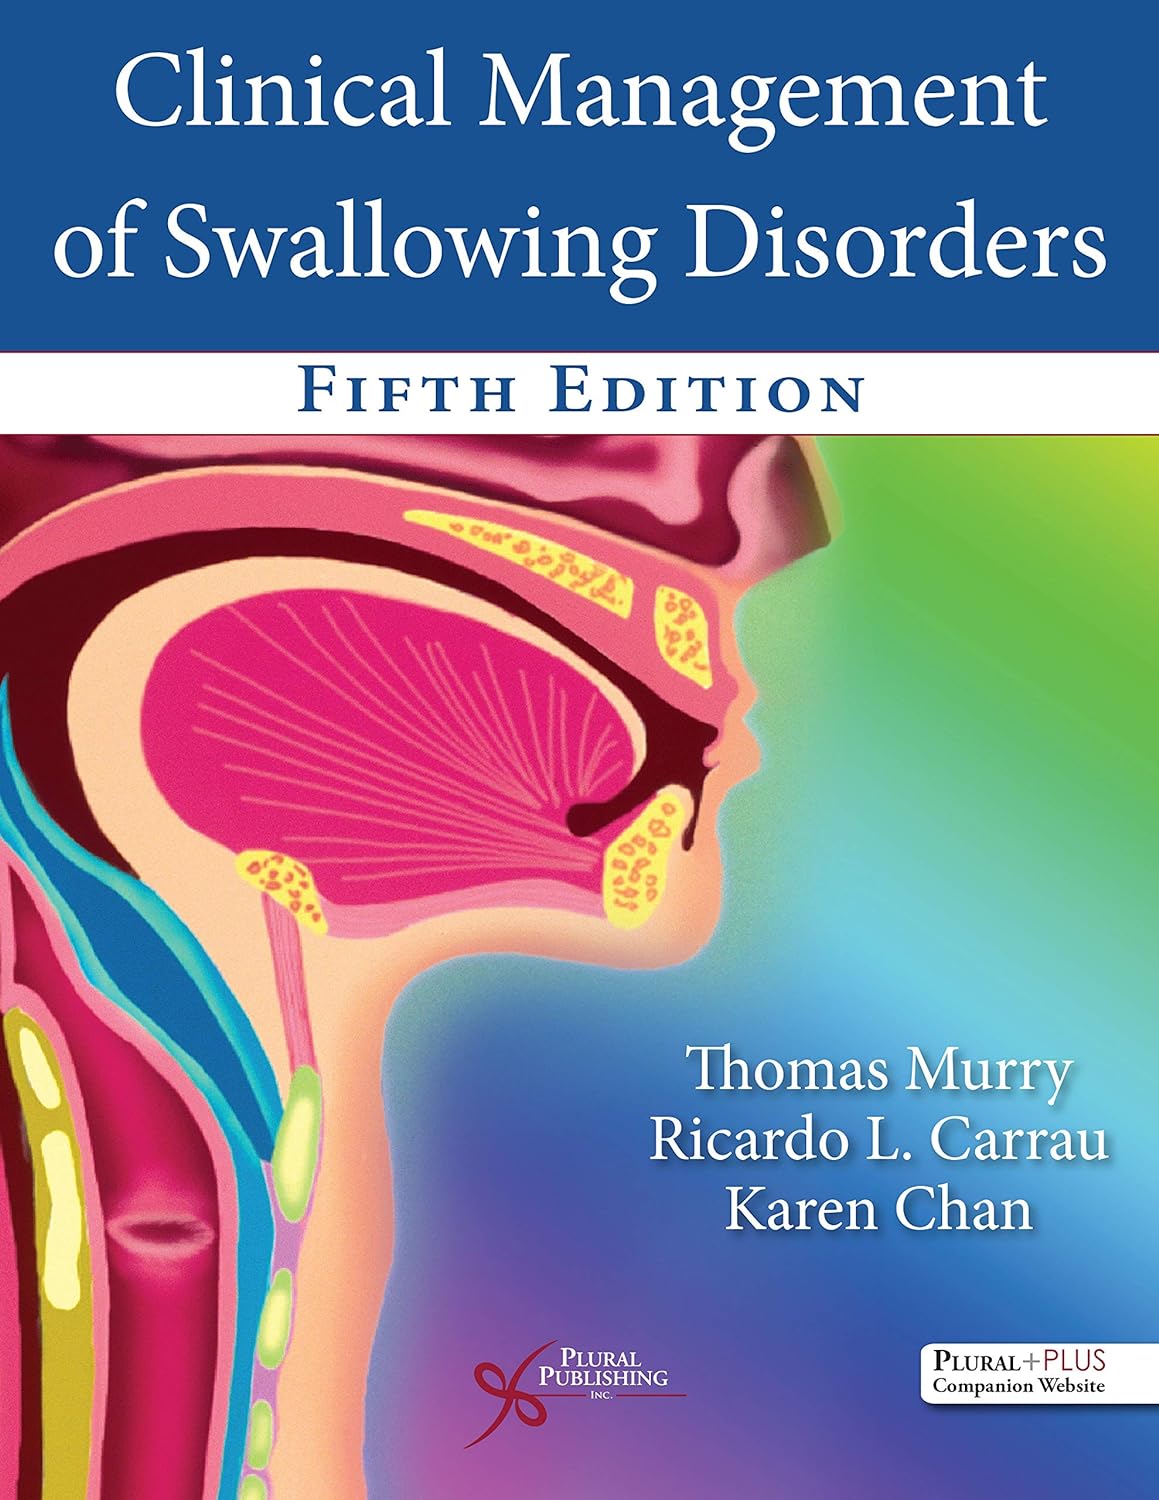 (EBook PDF)Clinical Management of Swallowing Disorders, 5th Edition by  Thomas Murry, Ricardo L. Carrau, Karen Chan